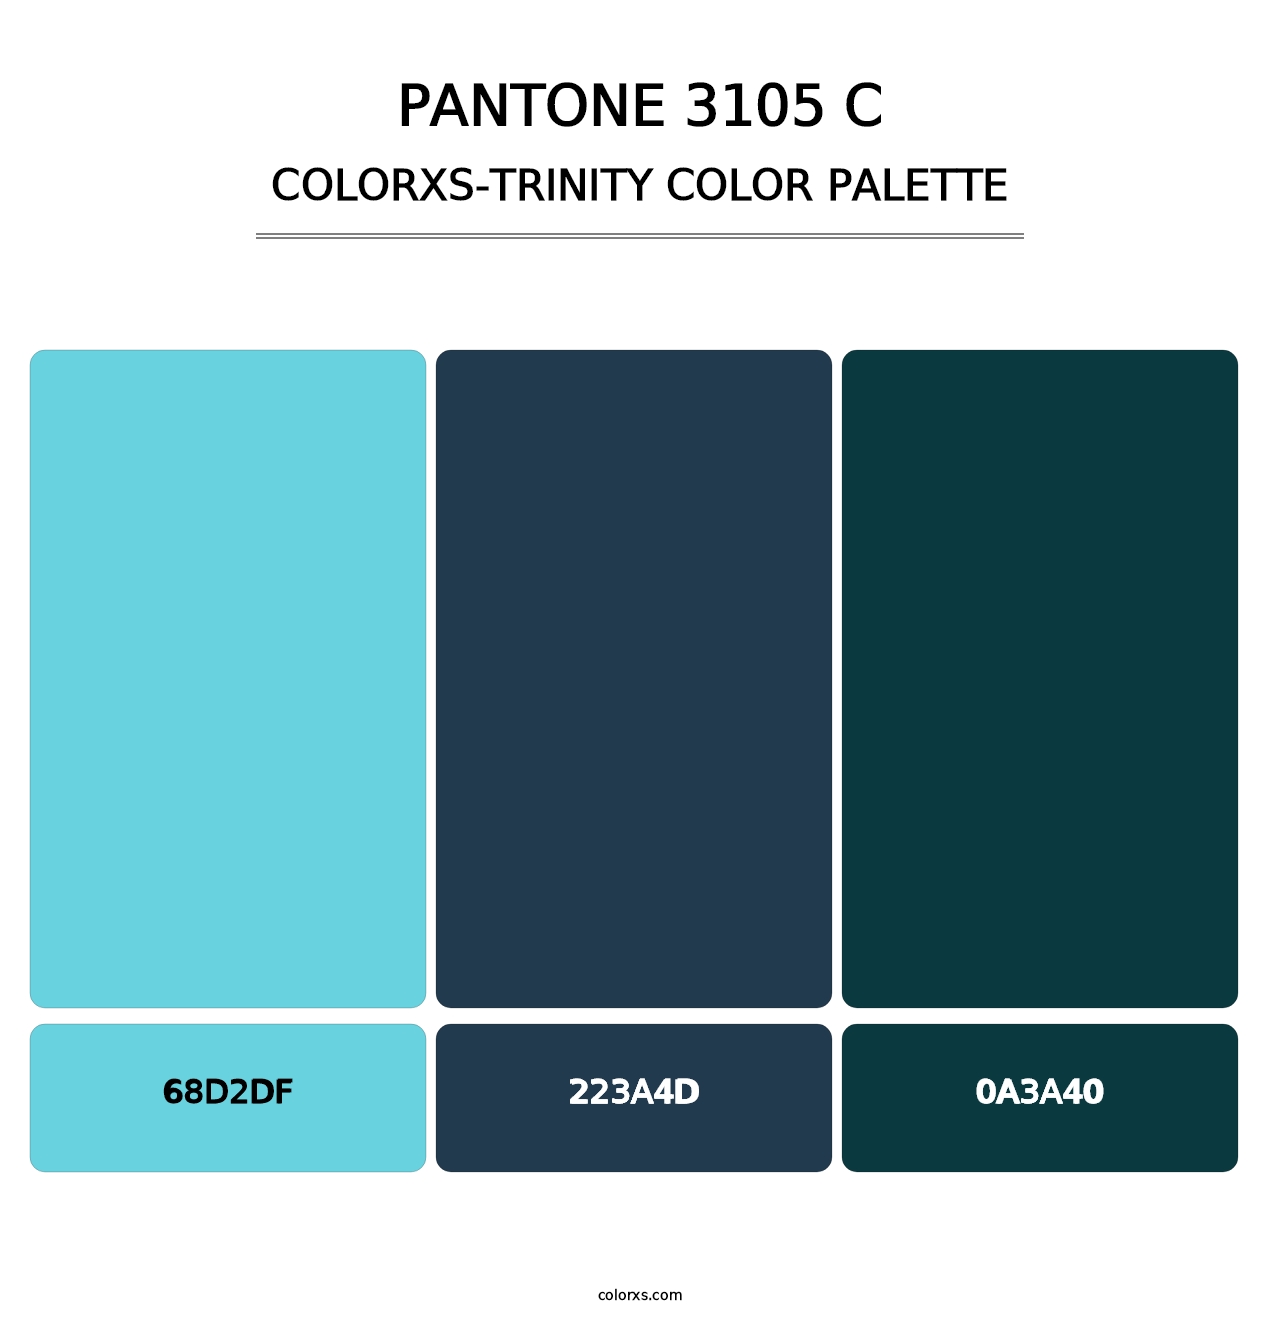 PANTONE 3105 C - Colorxs Trinity Palette